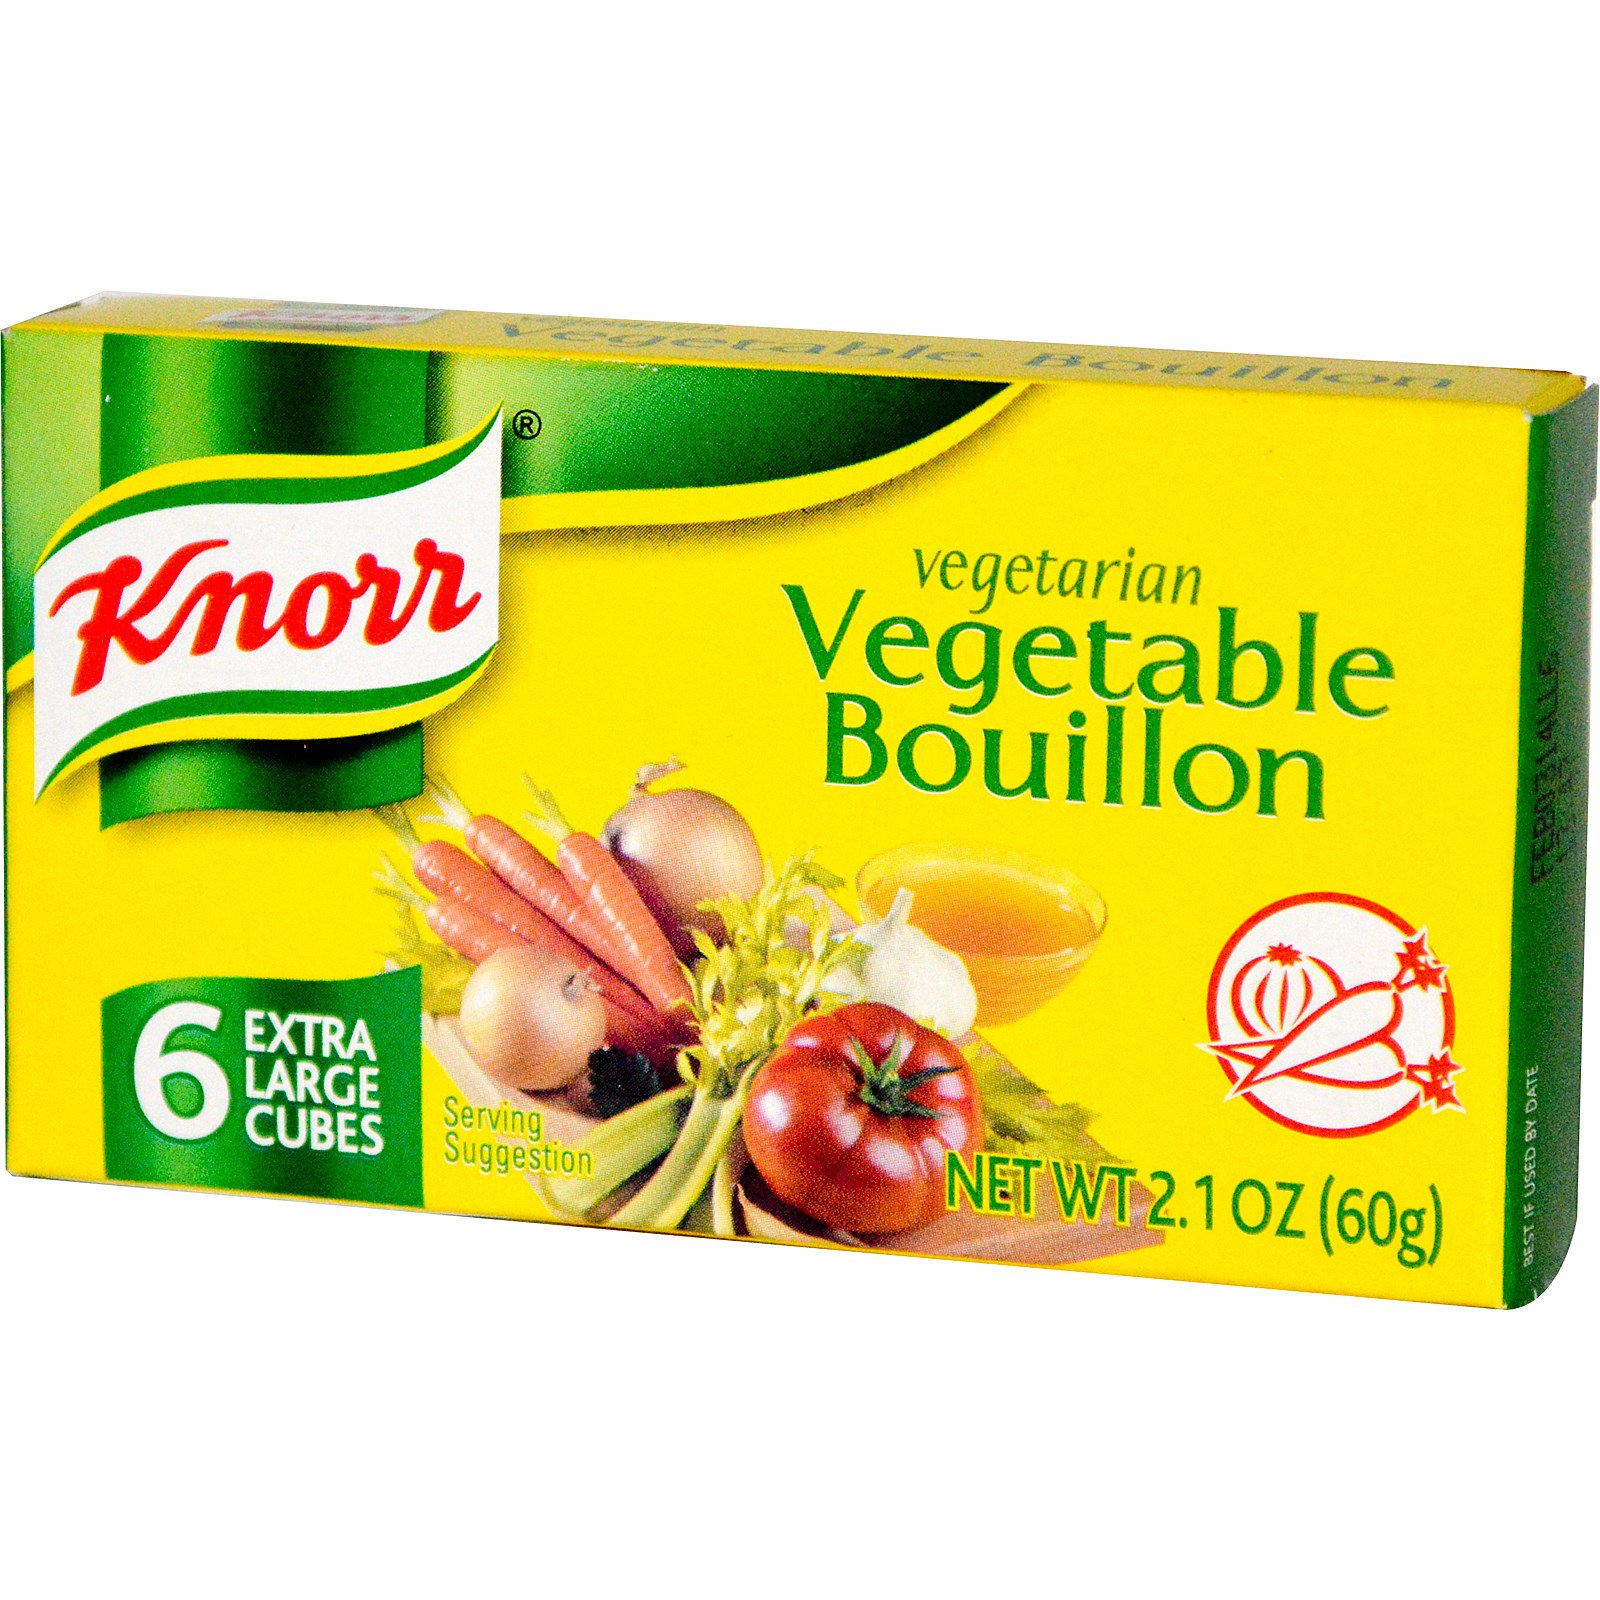 Knorr, Vegetarian Vegetable Bouillon, 6 Extra Large Cubes, 2.1 oz (60 g ...